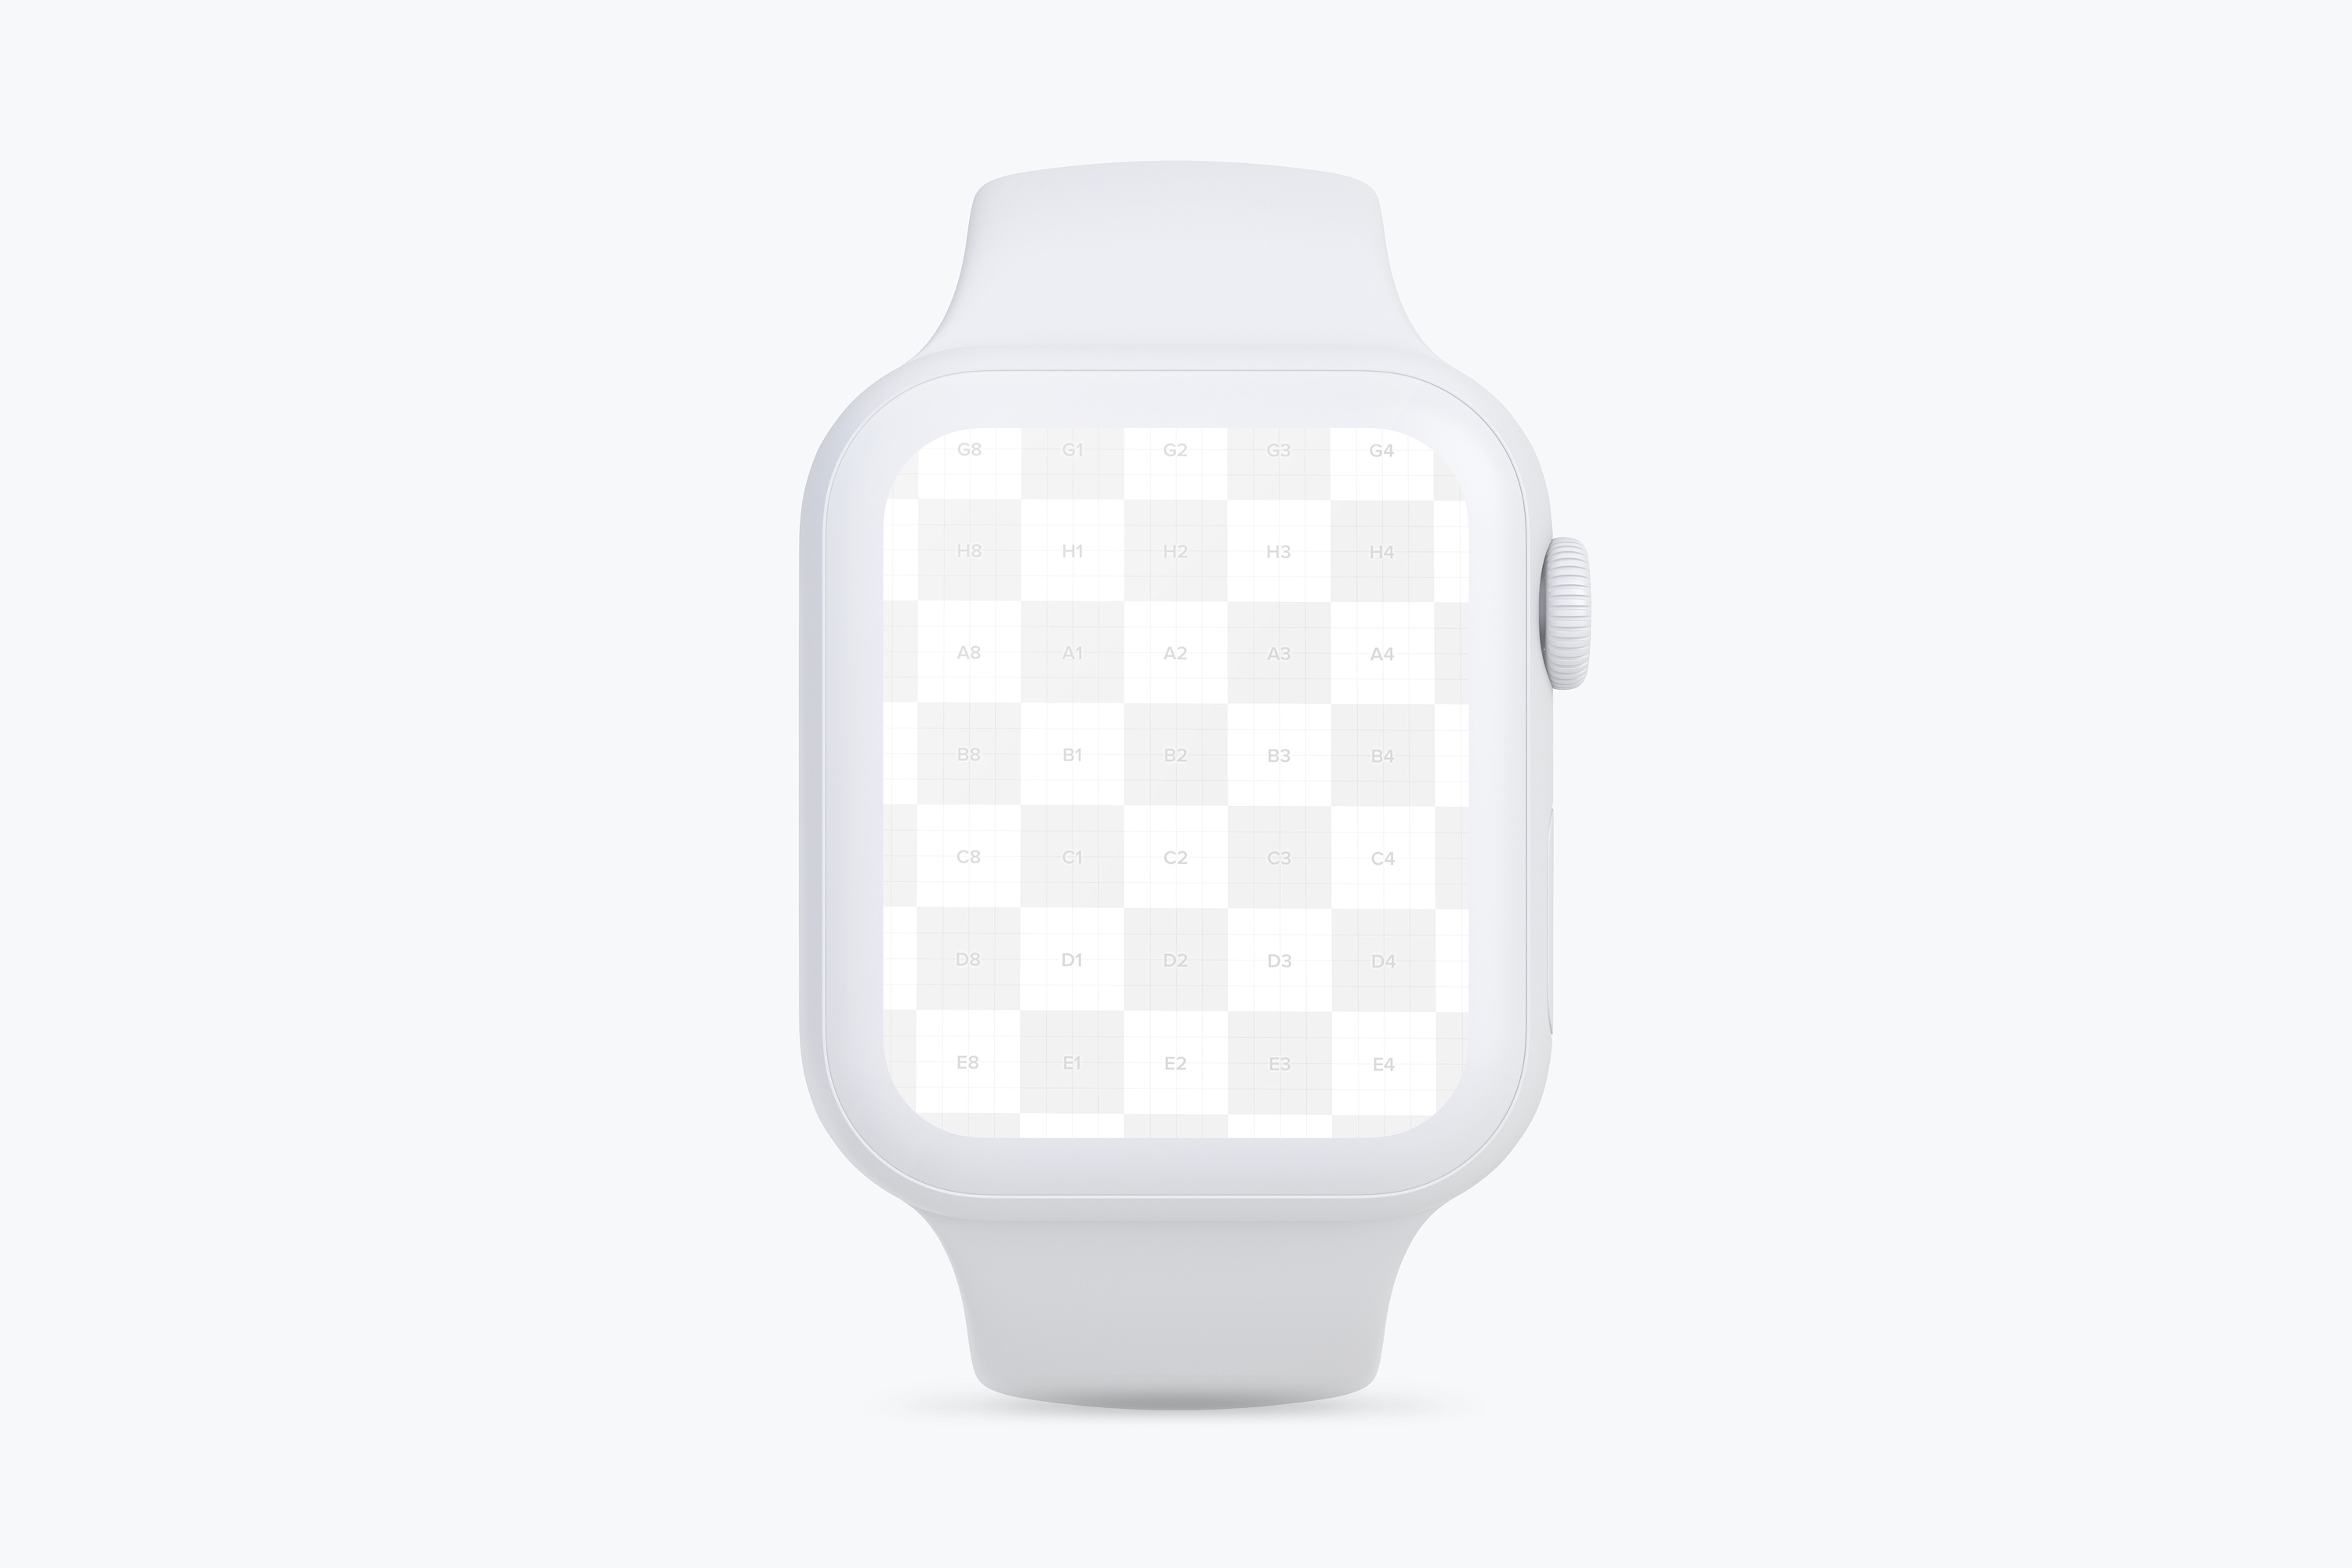 Apple Watch 4智能手表屏幕前视图样机模板 Clay Apple Watch Series 4 (44mm) Mockup, Front View插图(1)